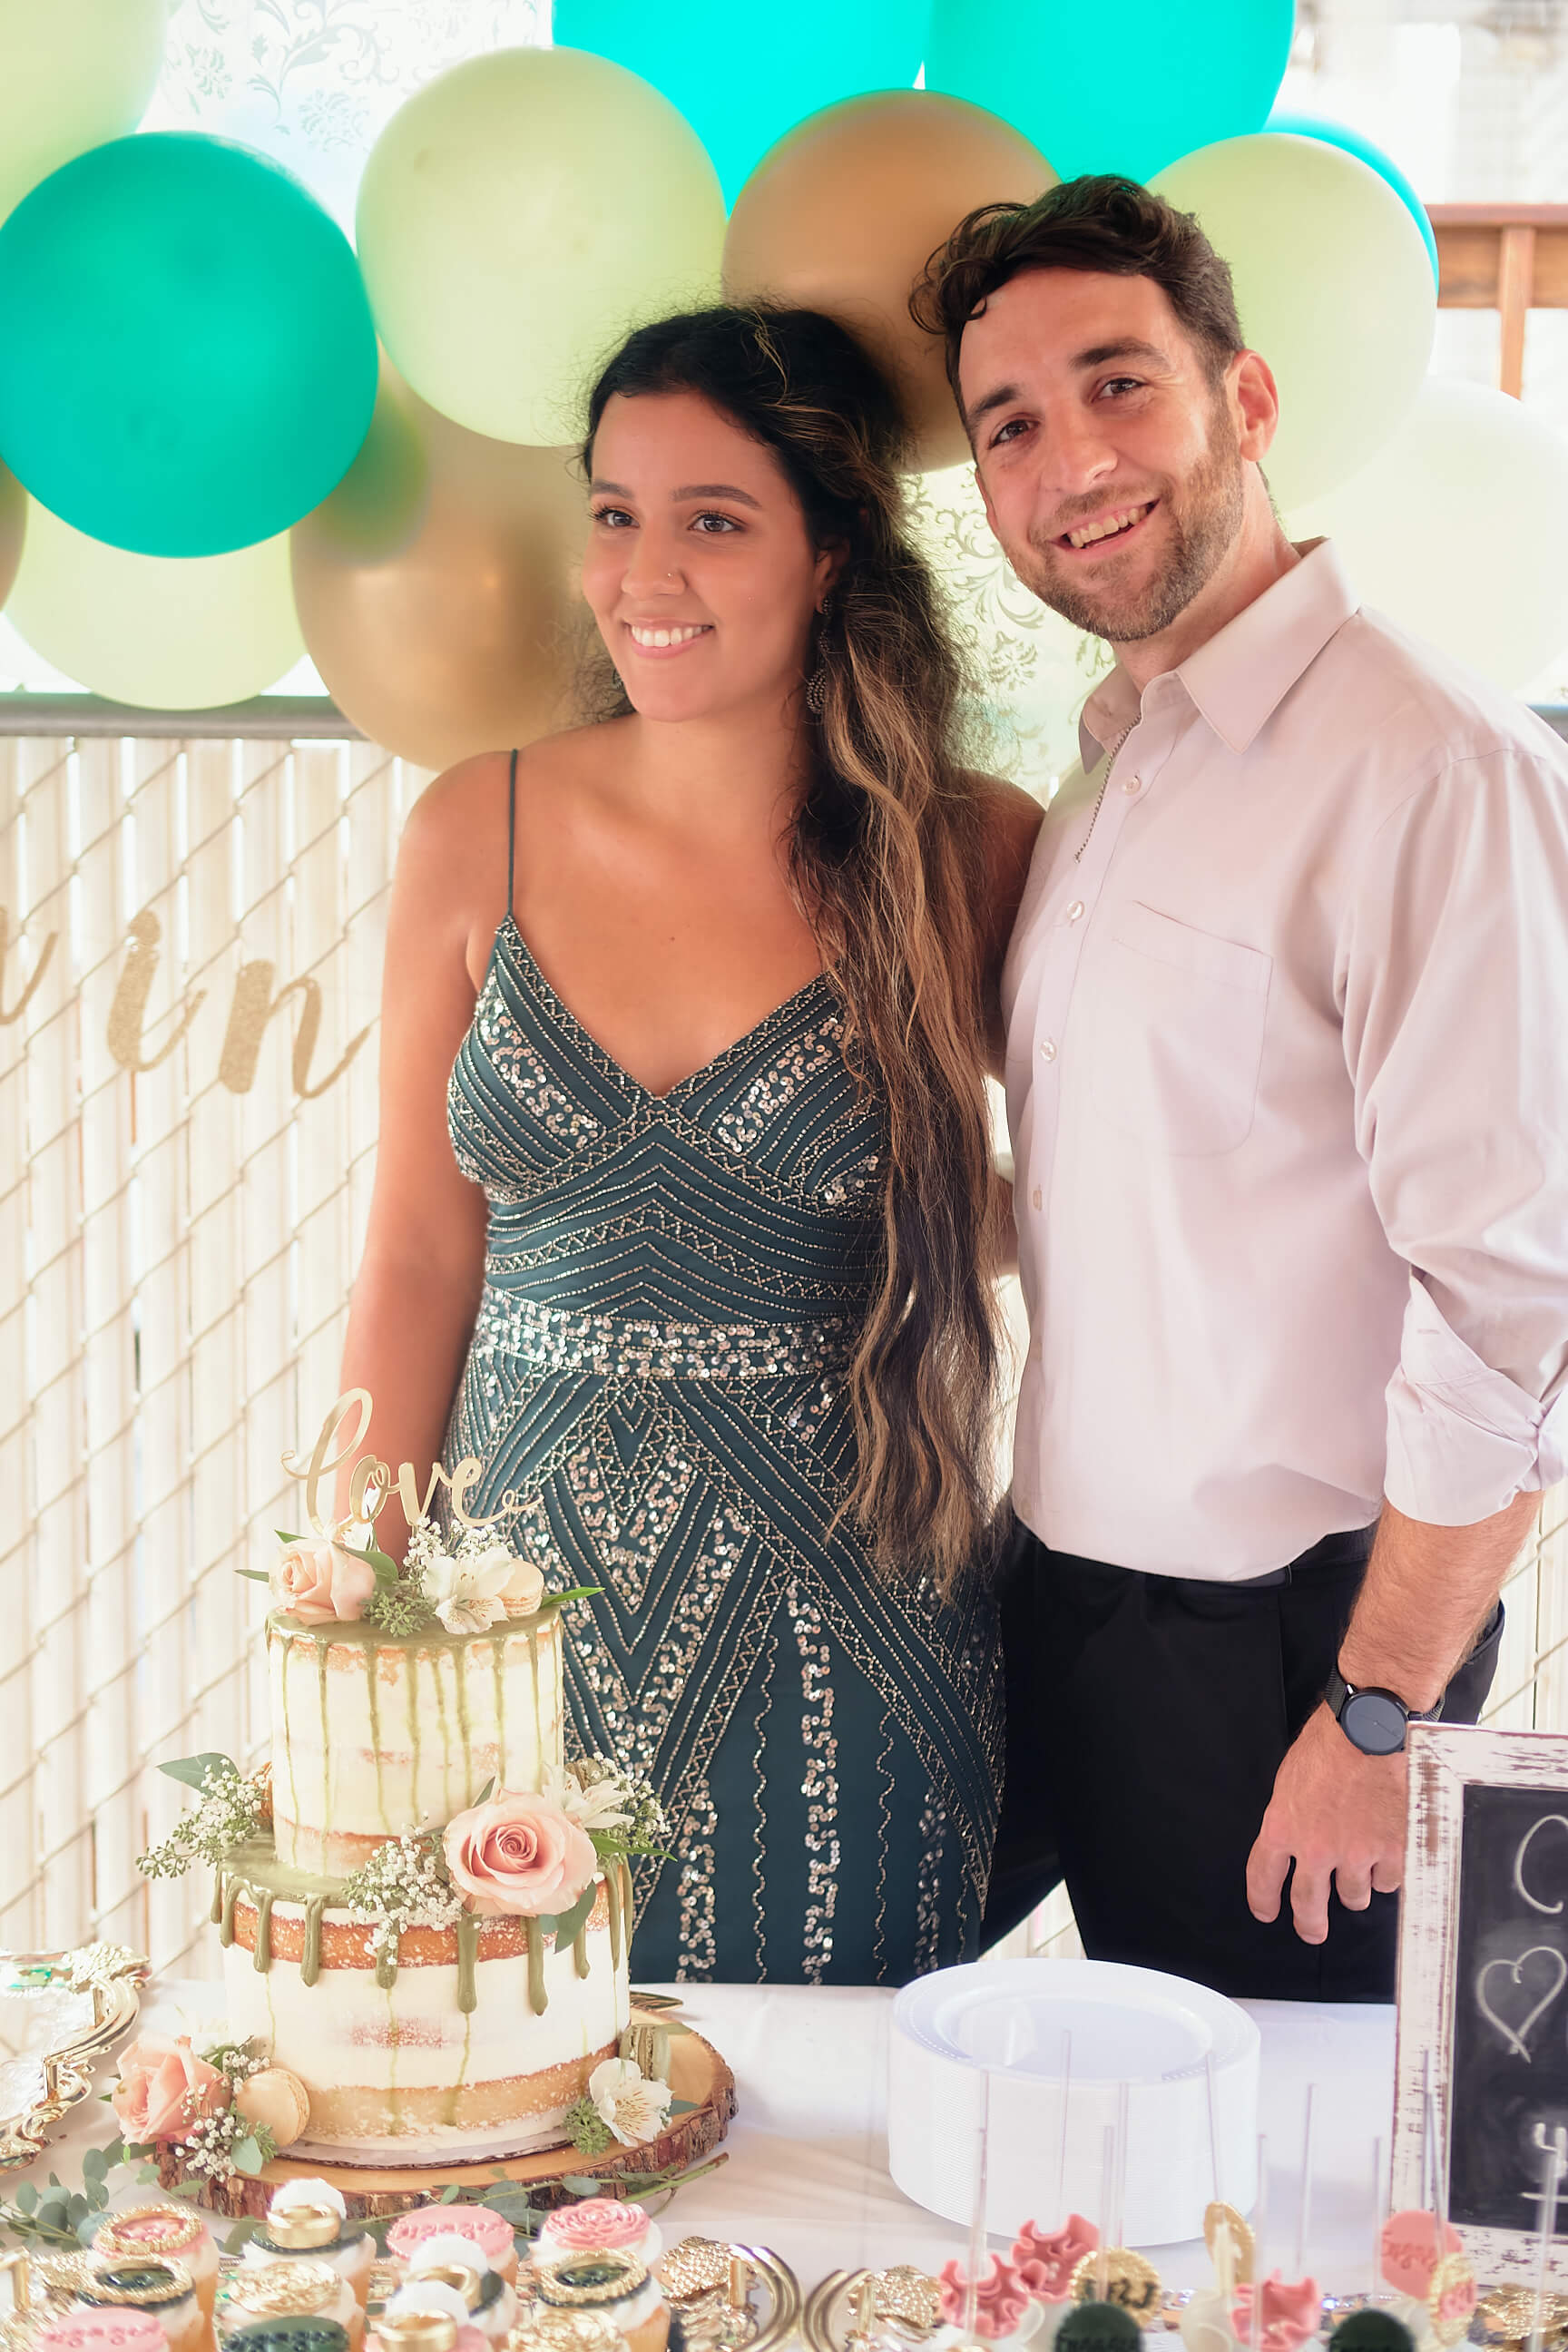 Sabrina & Joe - Engagement Party - Couples Photography - Family Photos - Staten Island, New York - Lifestyle Photography